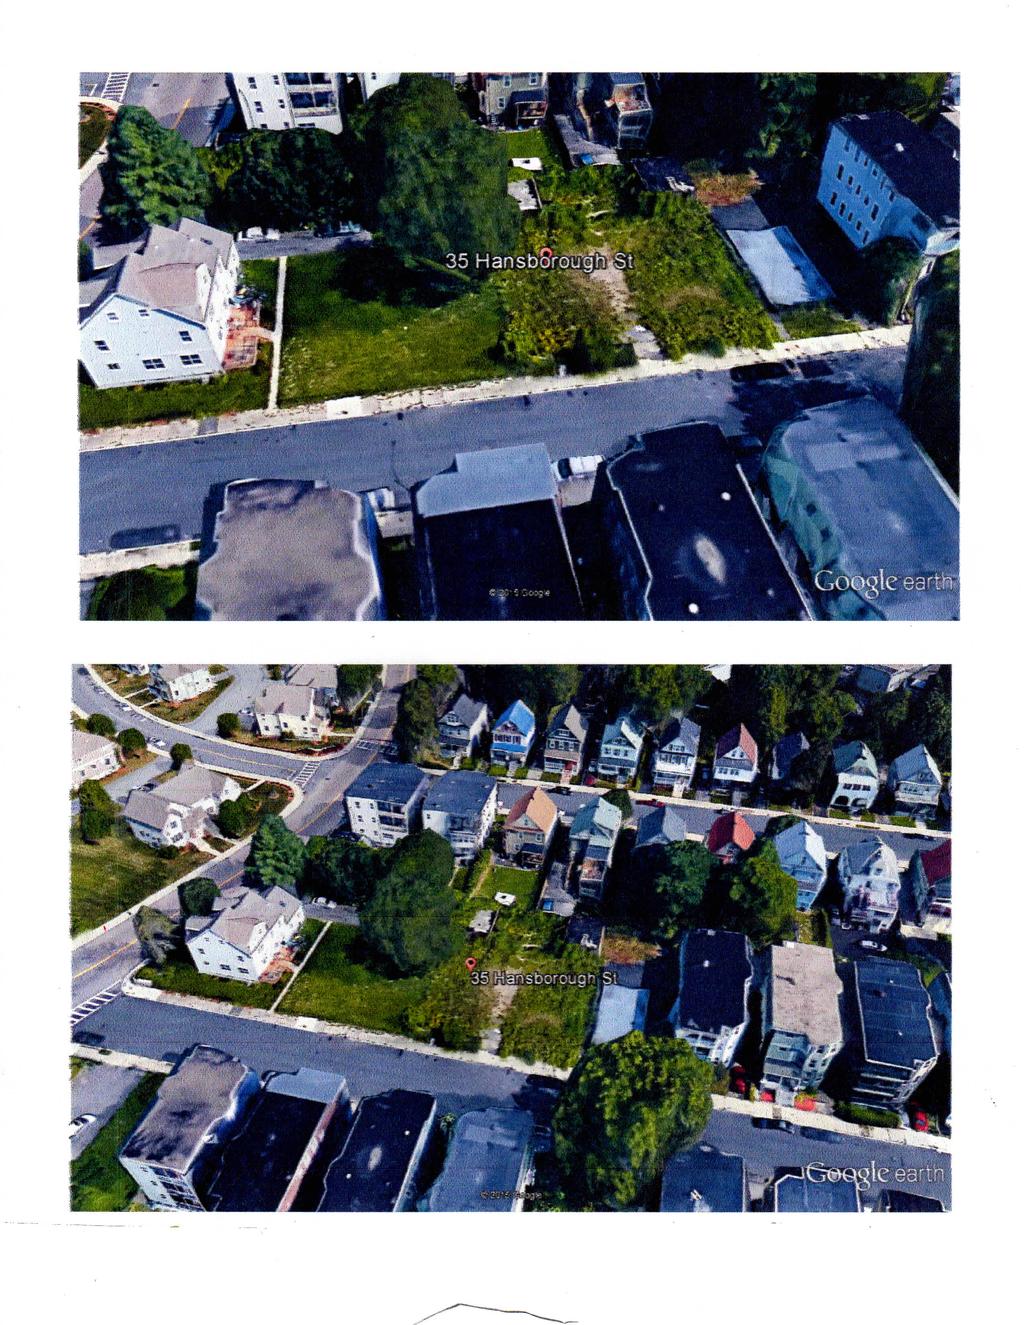 EXHIBIT 3: View of Property at Hansborough Street